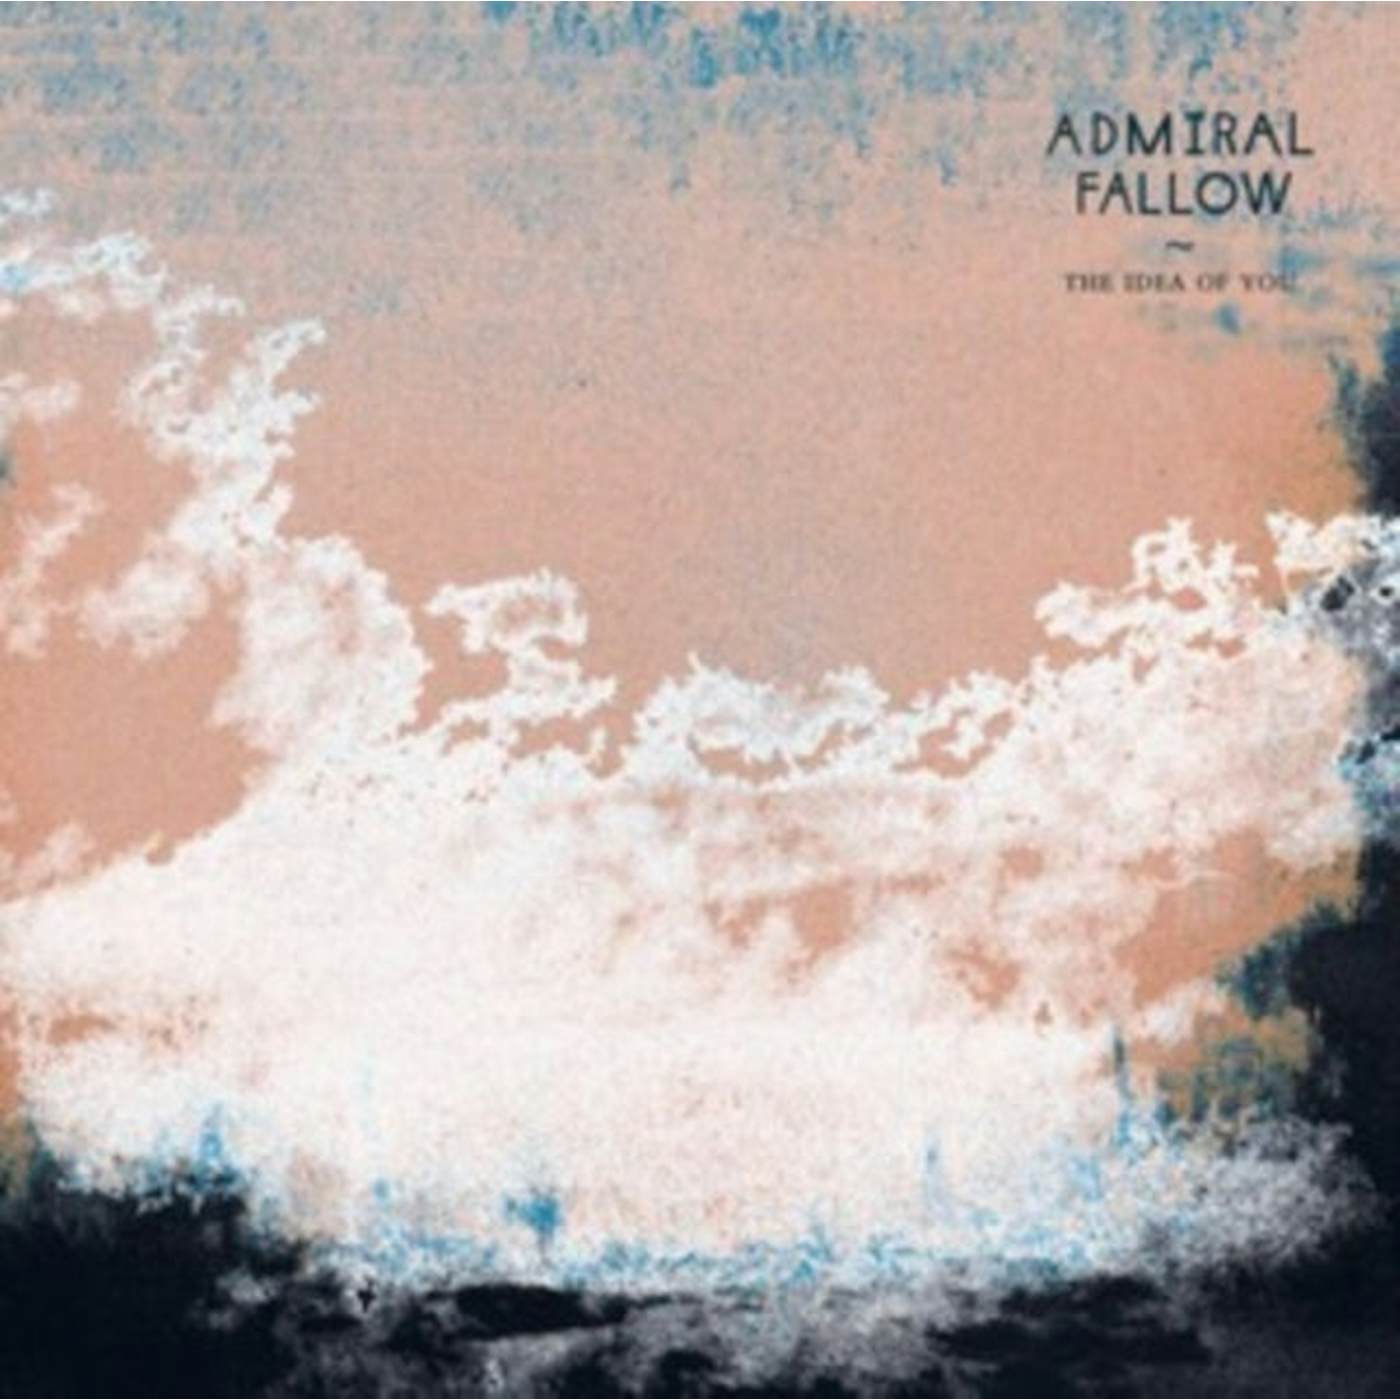 Admiral Fallow LP Vinyl Record - The Idea Of You